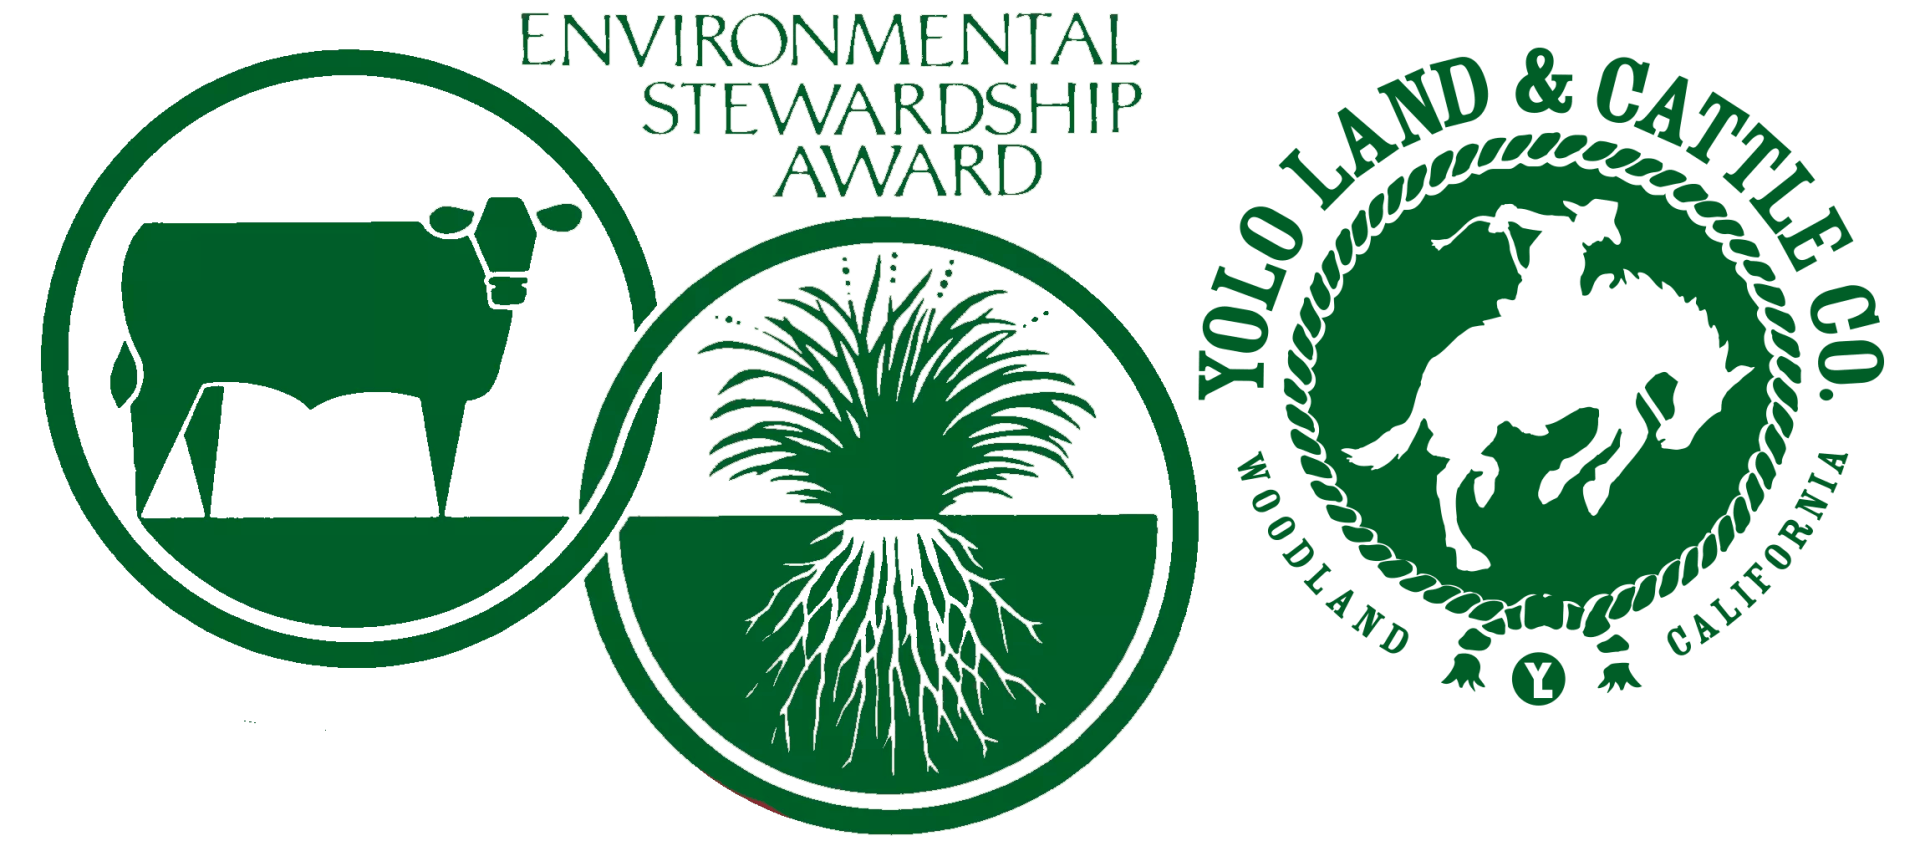 Environmental stewardship award